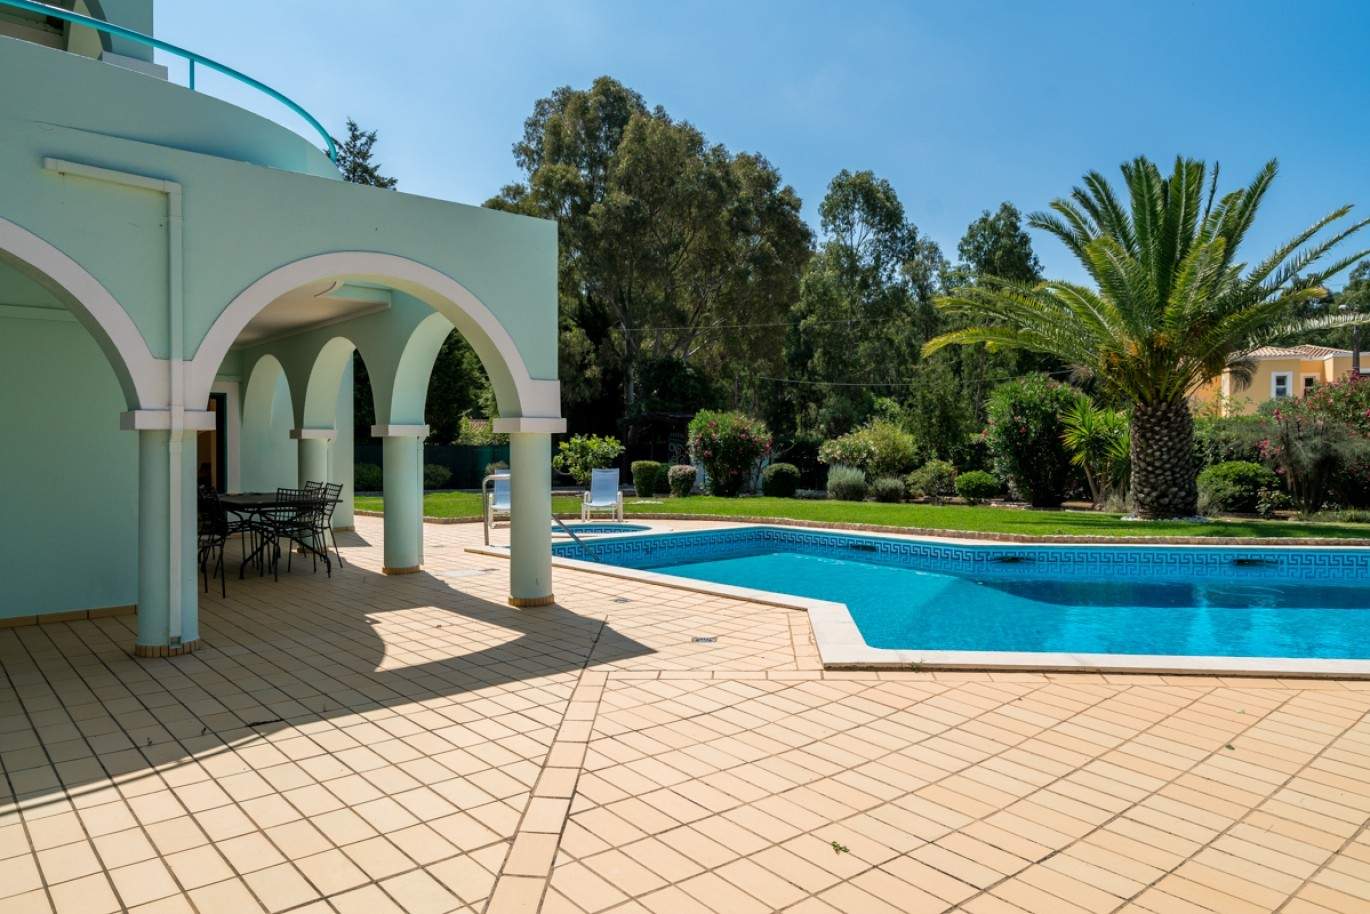 Sale of villa with garden and pool in Penina, Alvor, Algarve, Portugal_83412